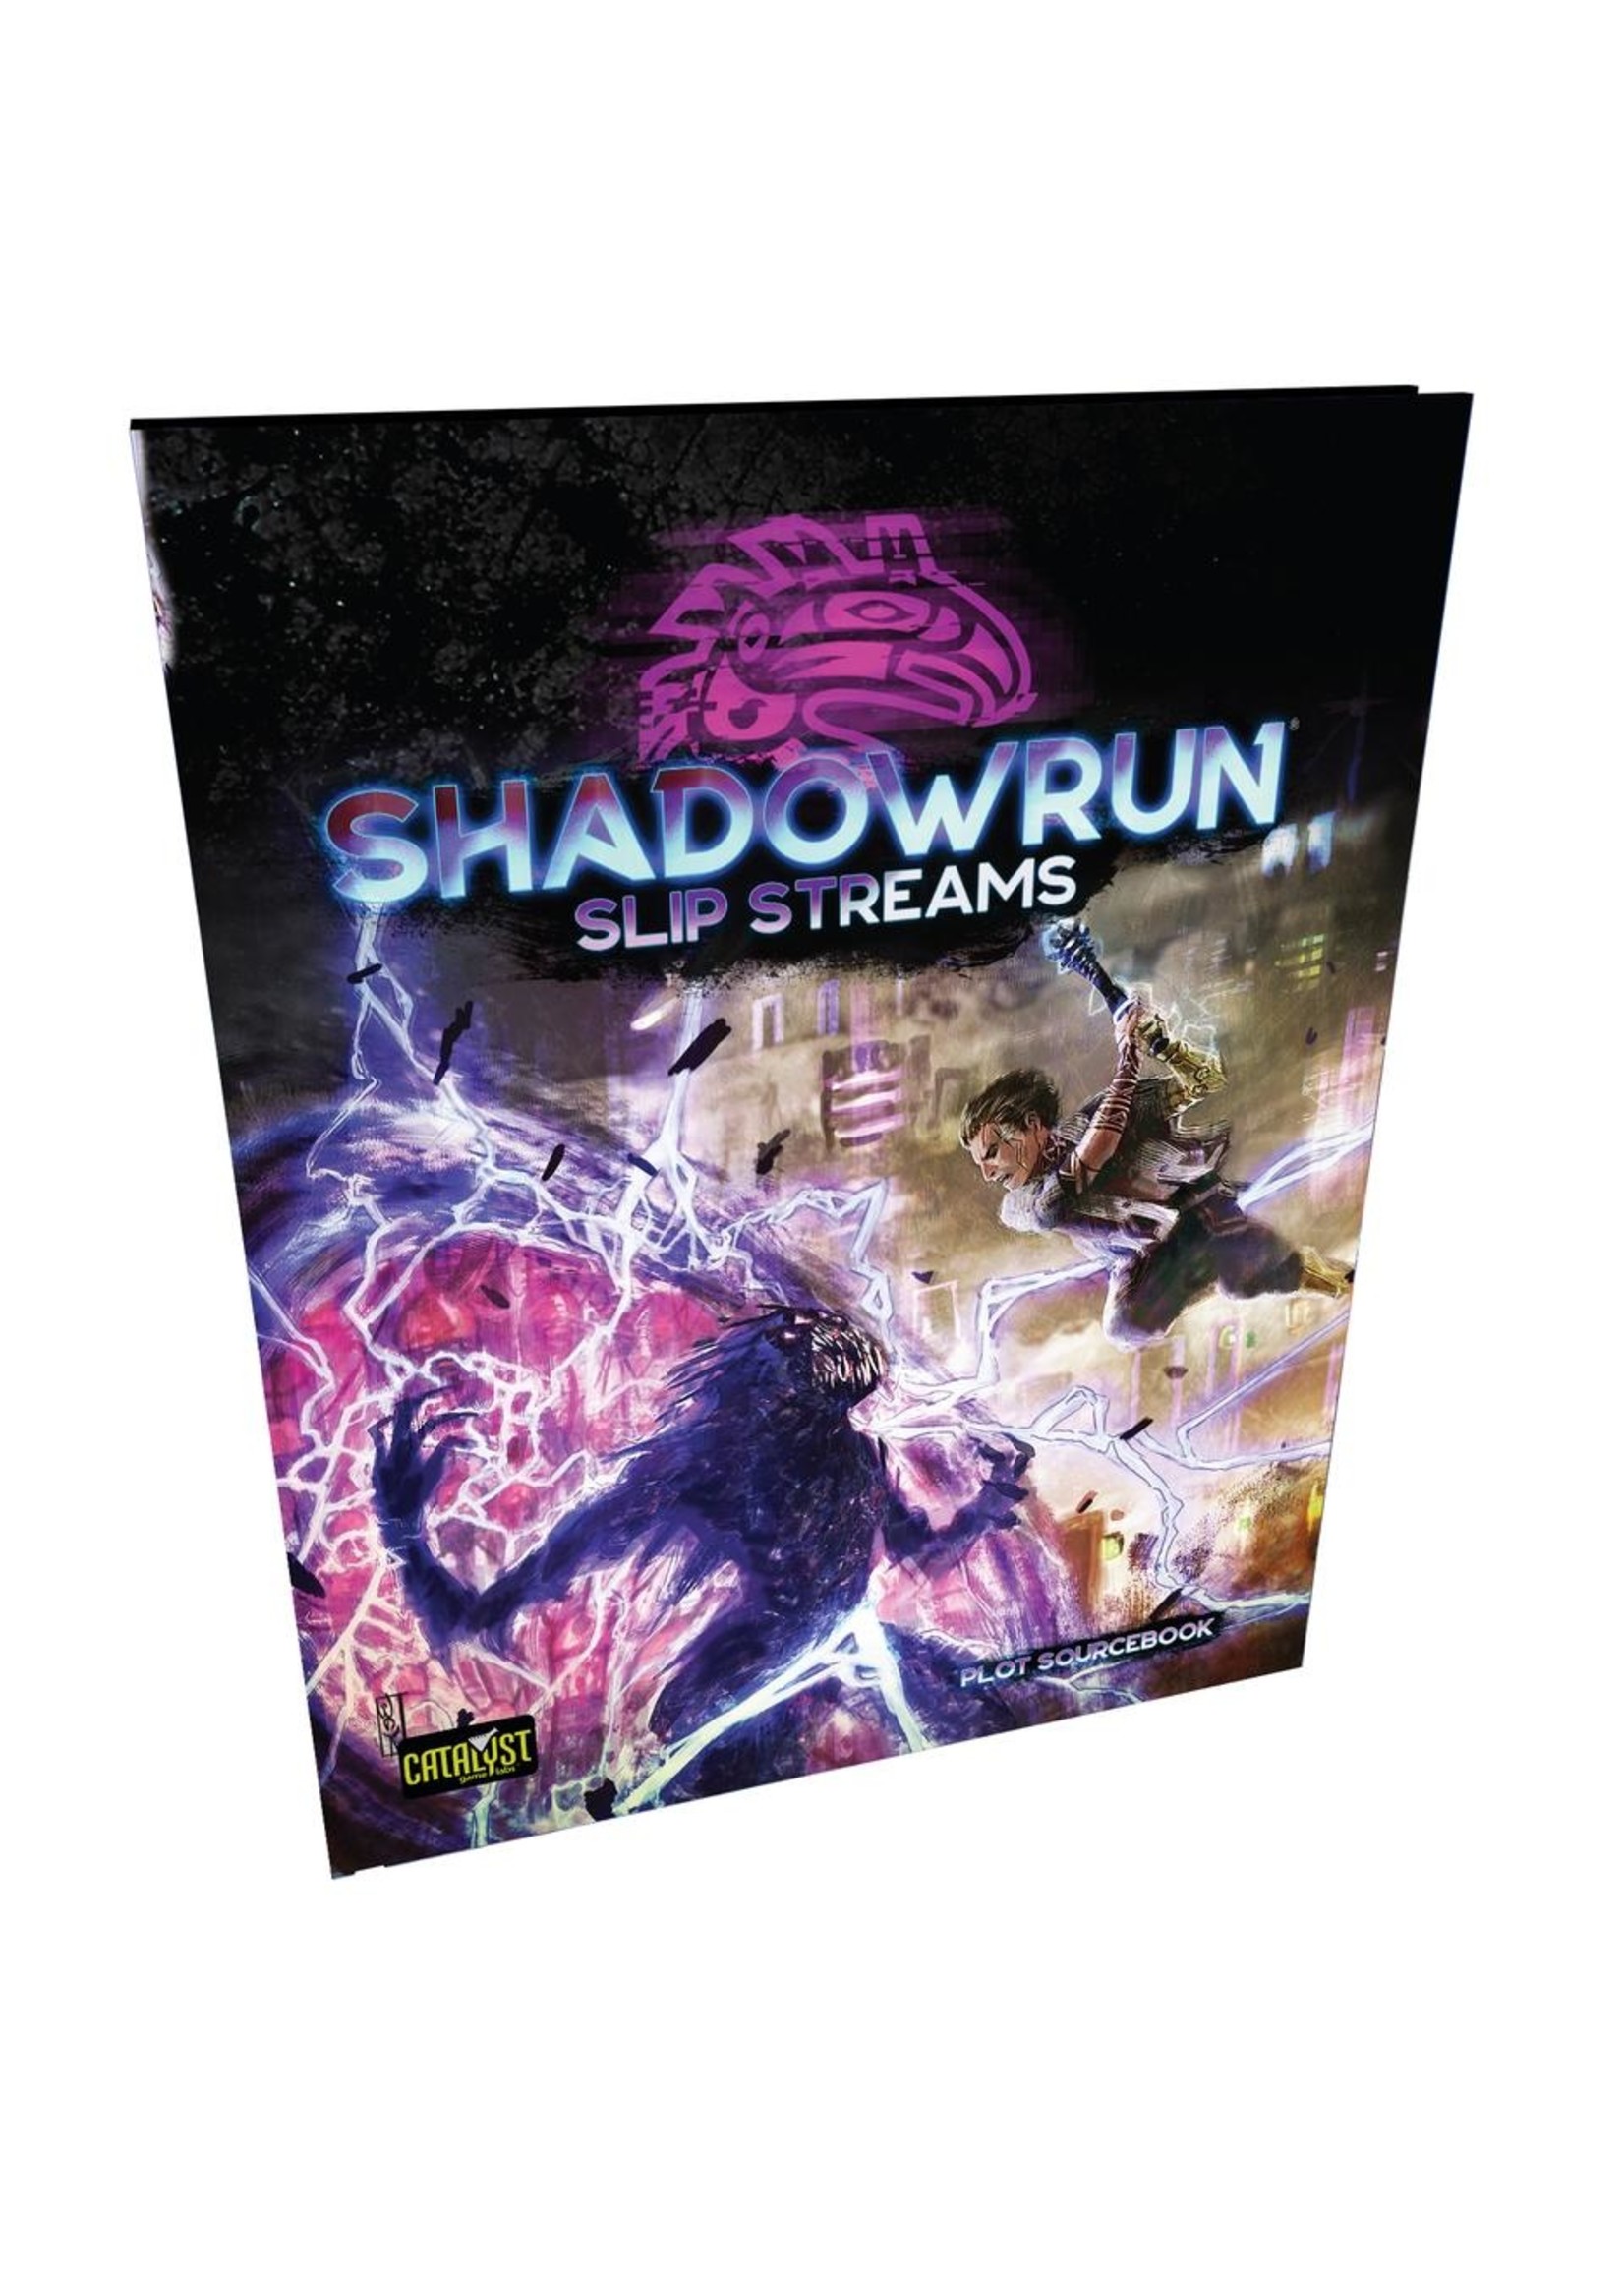 Shadowrun 6e Shadowrun, 6th Ed.: Slip Streams